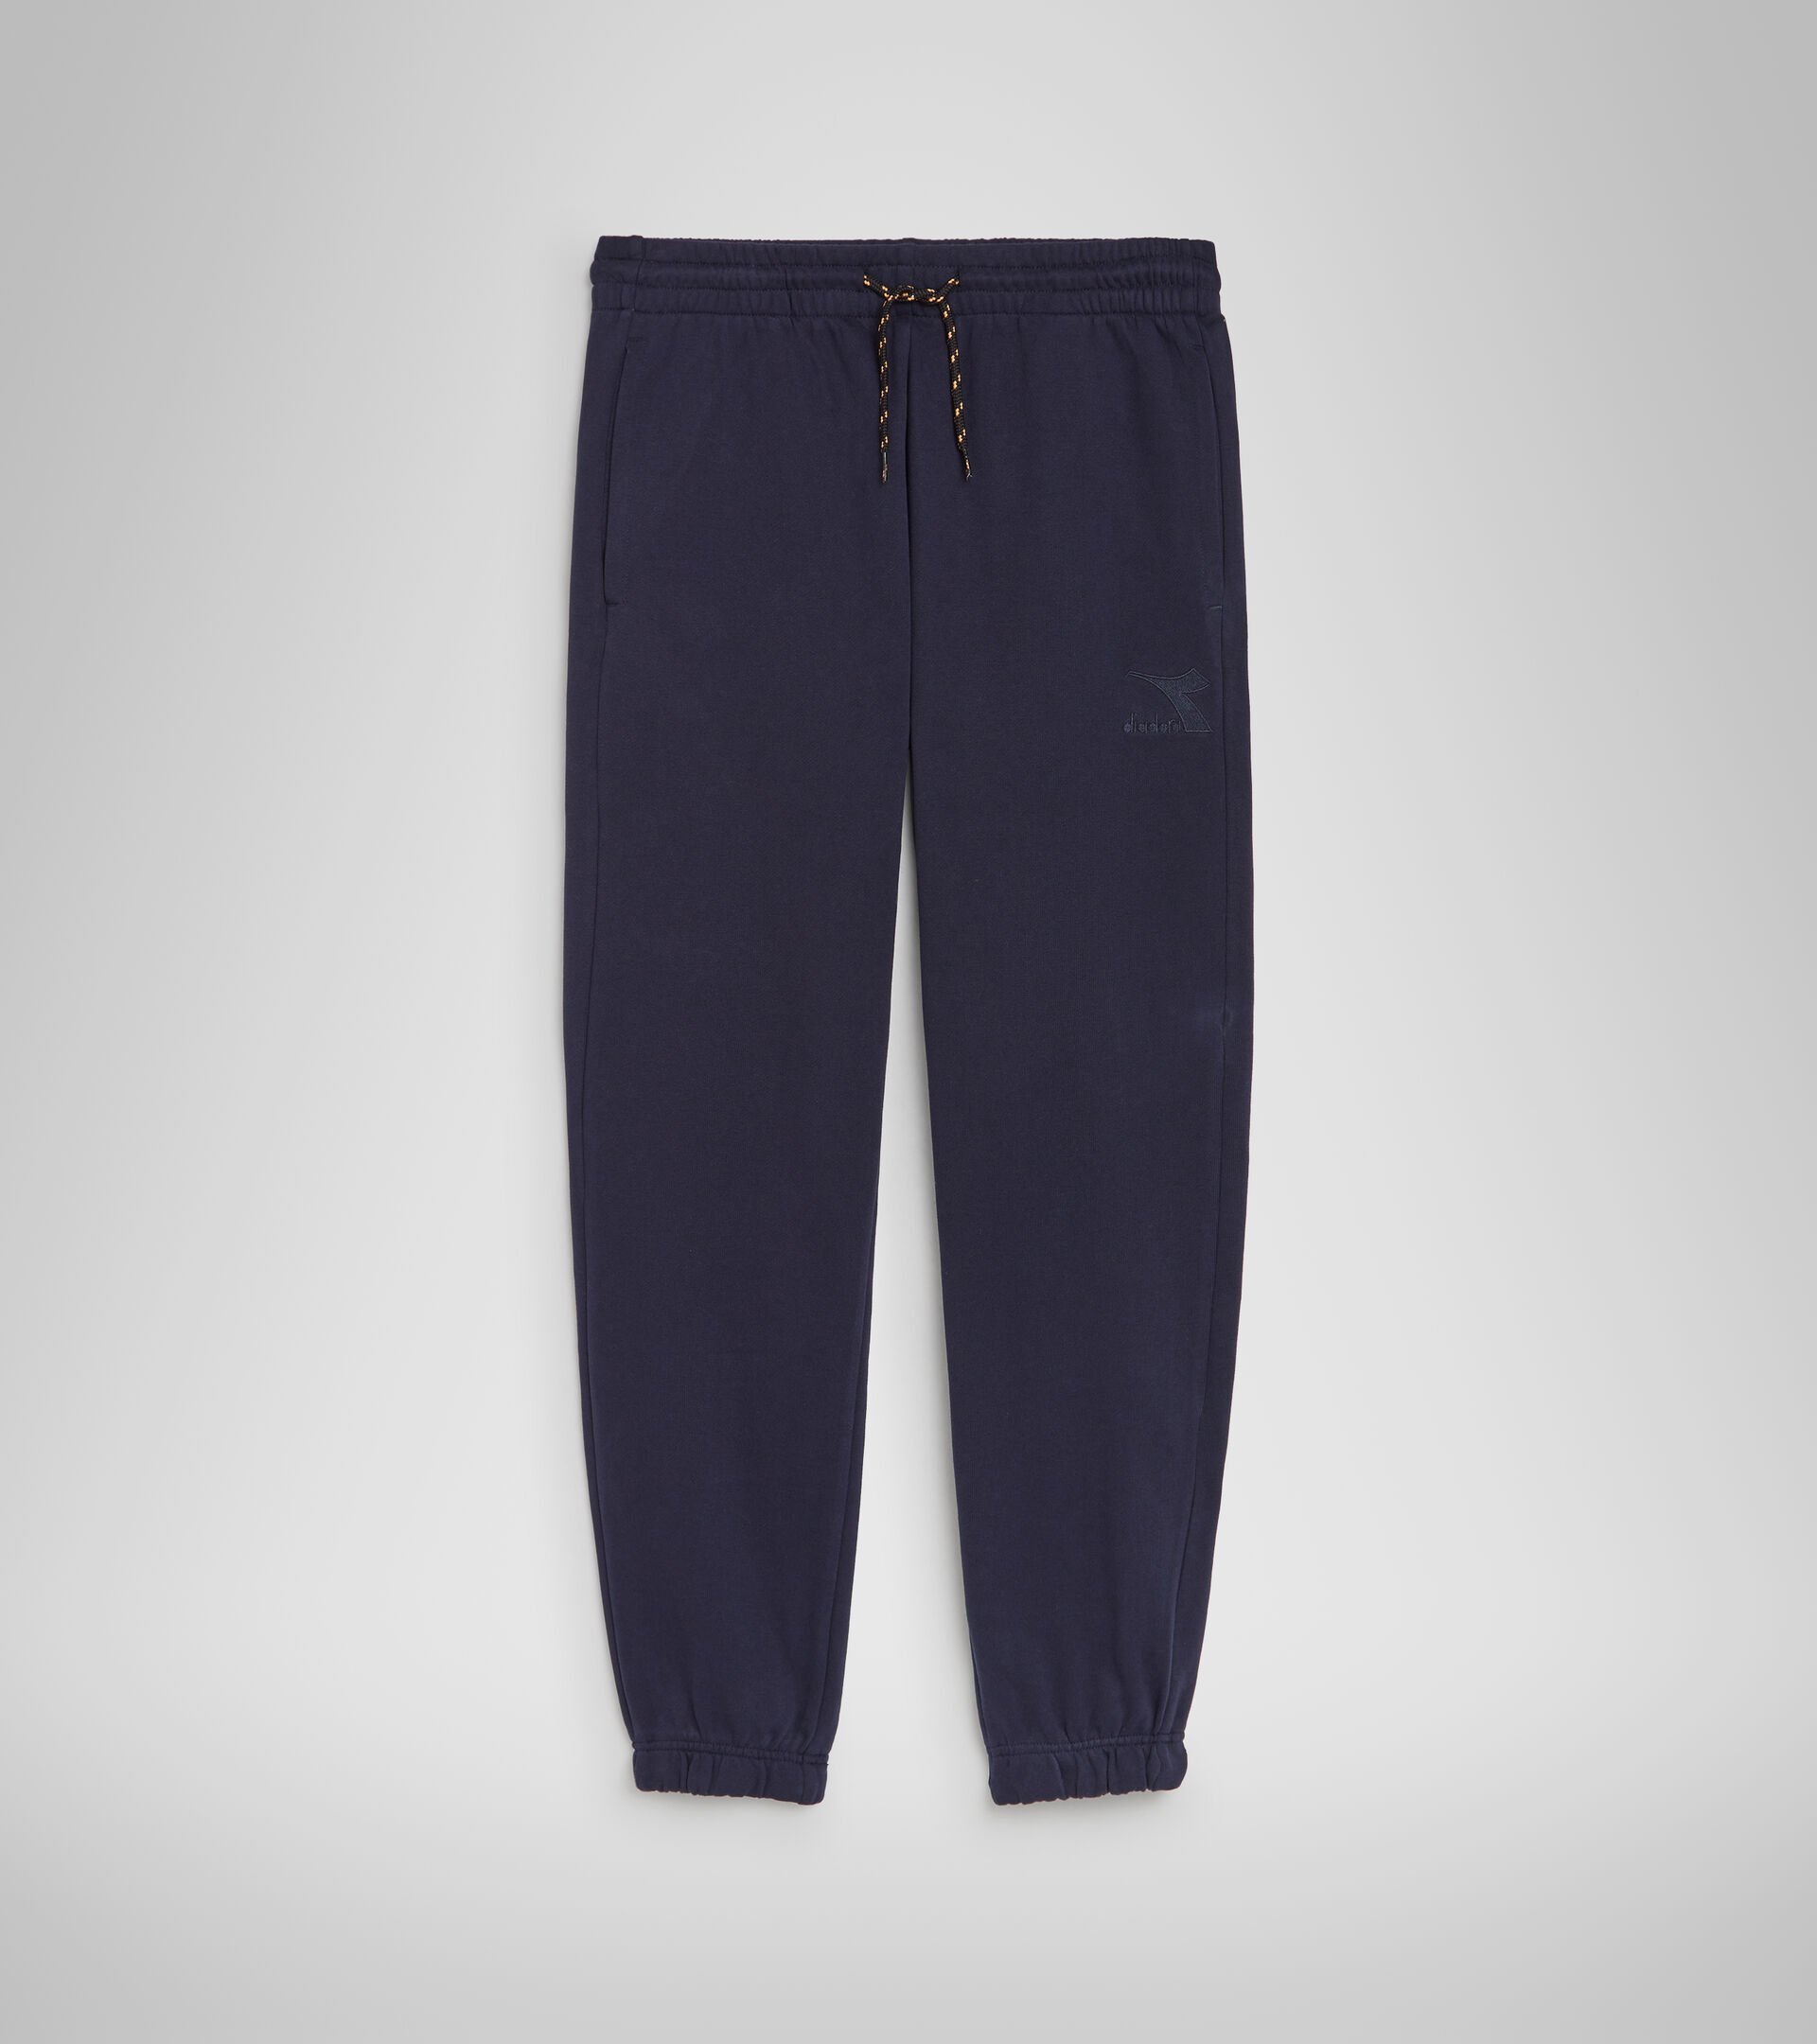 Cotton sports trousers - Men’s PANTS CUFF DRIFT CLASSIC NAVY - Diadora